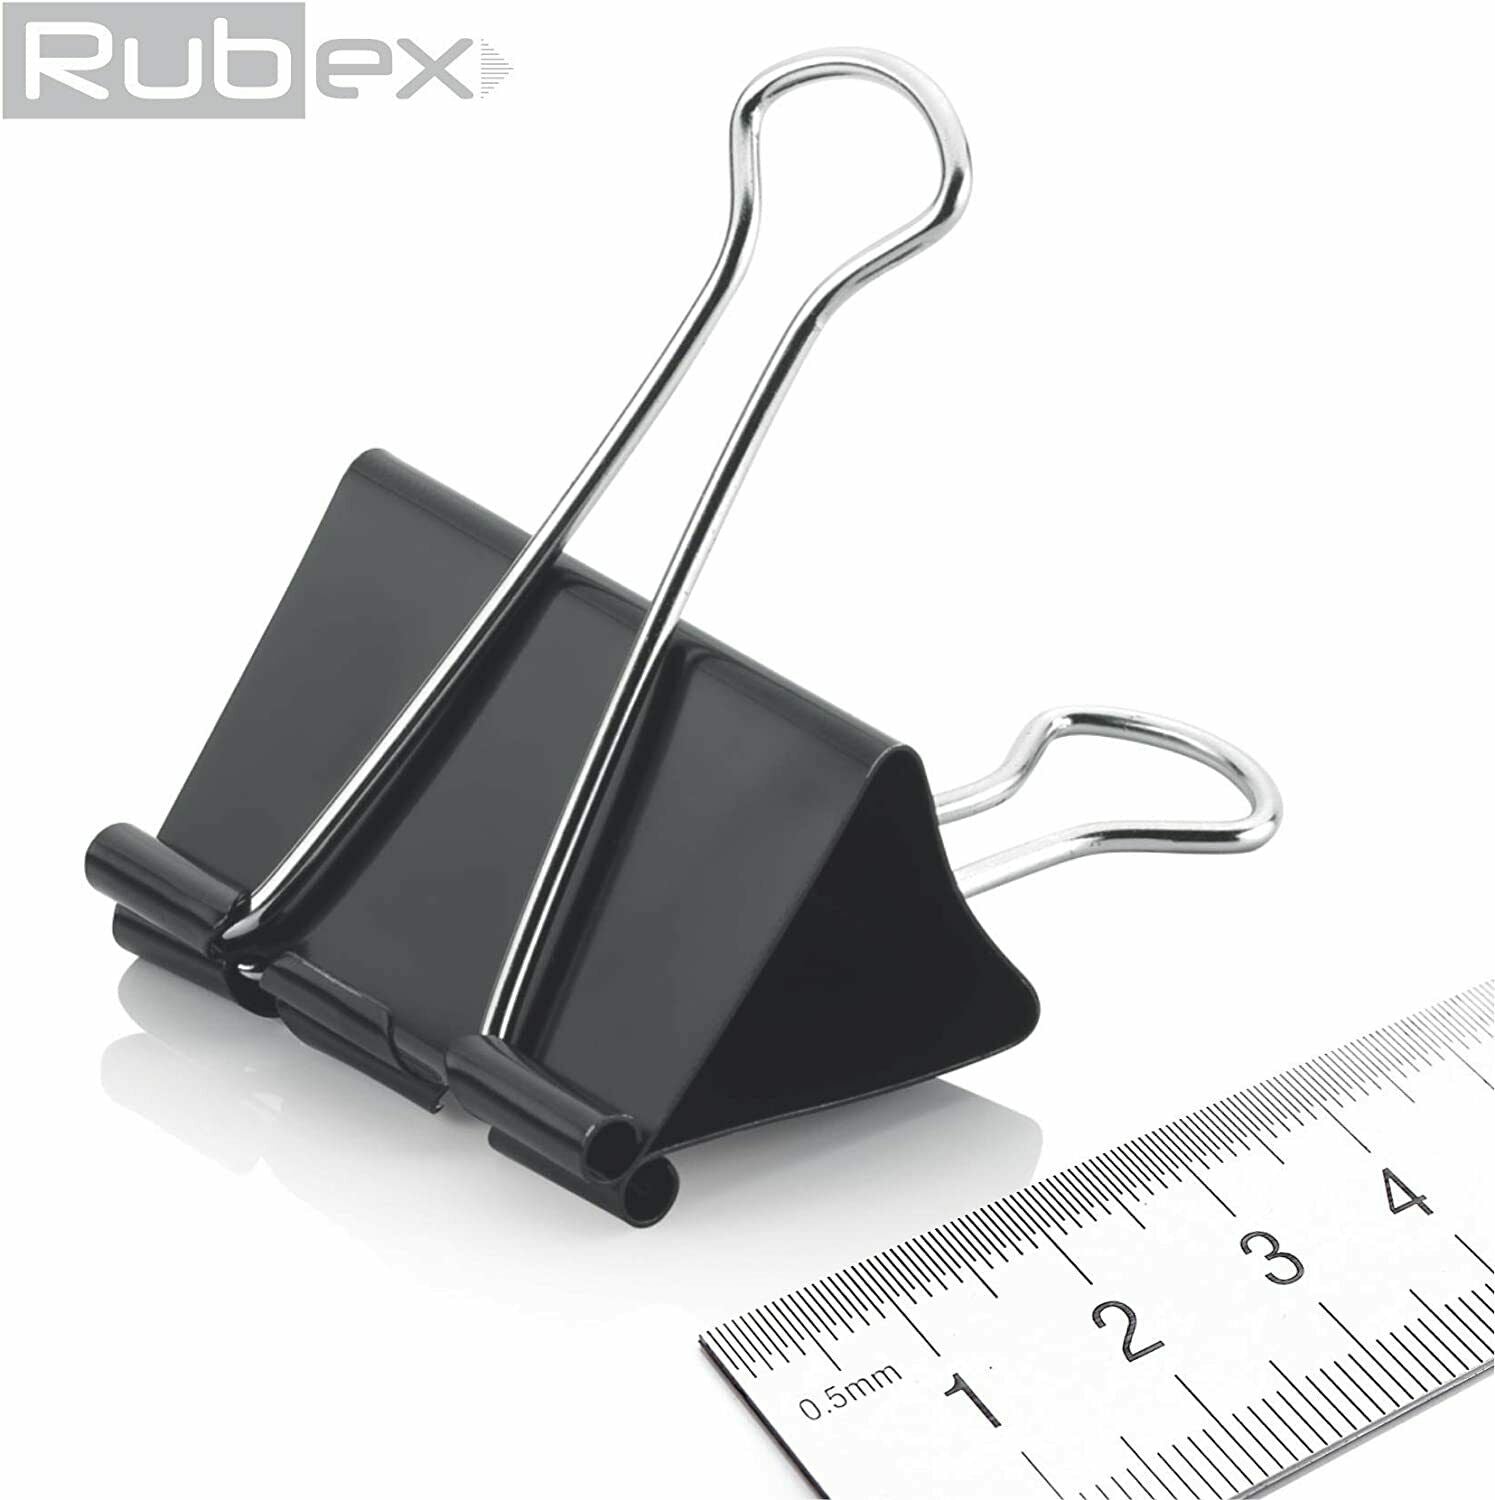 Rubex Binder Clips, Black Large Binder Clips, Jumbo Binder Clips Mixed –  rubexusa